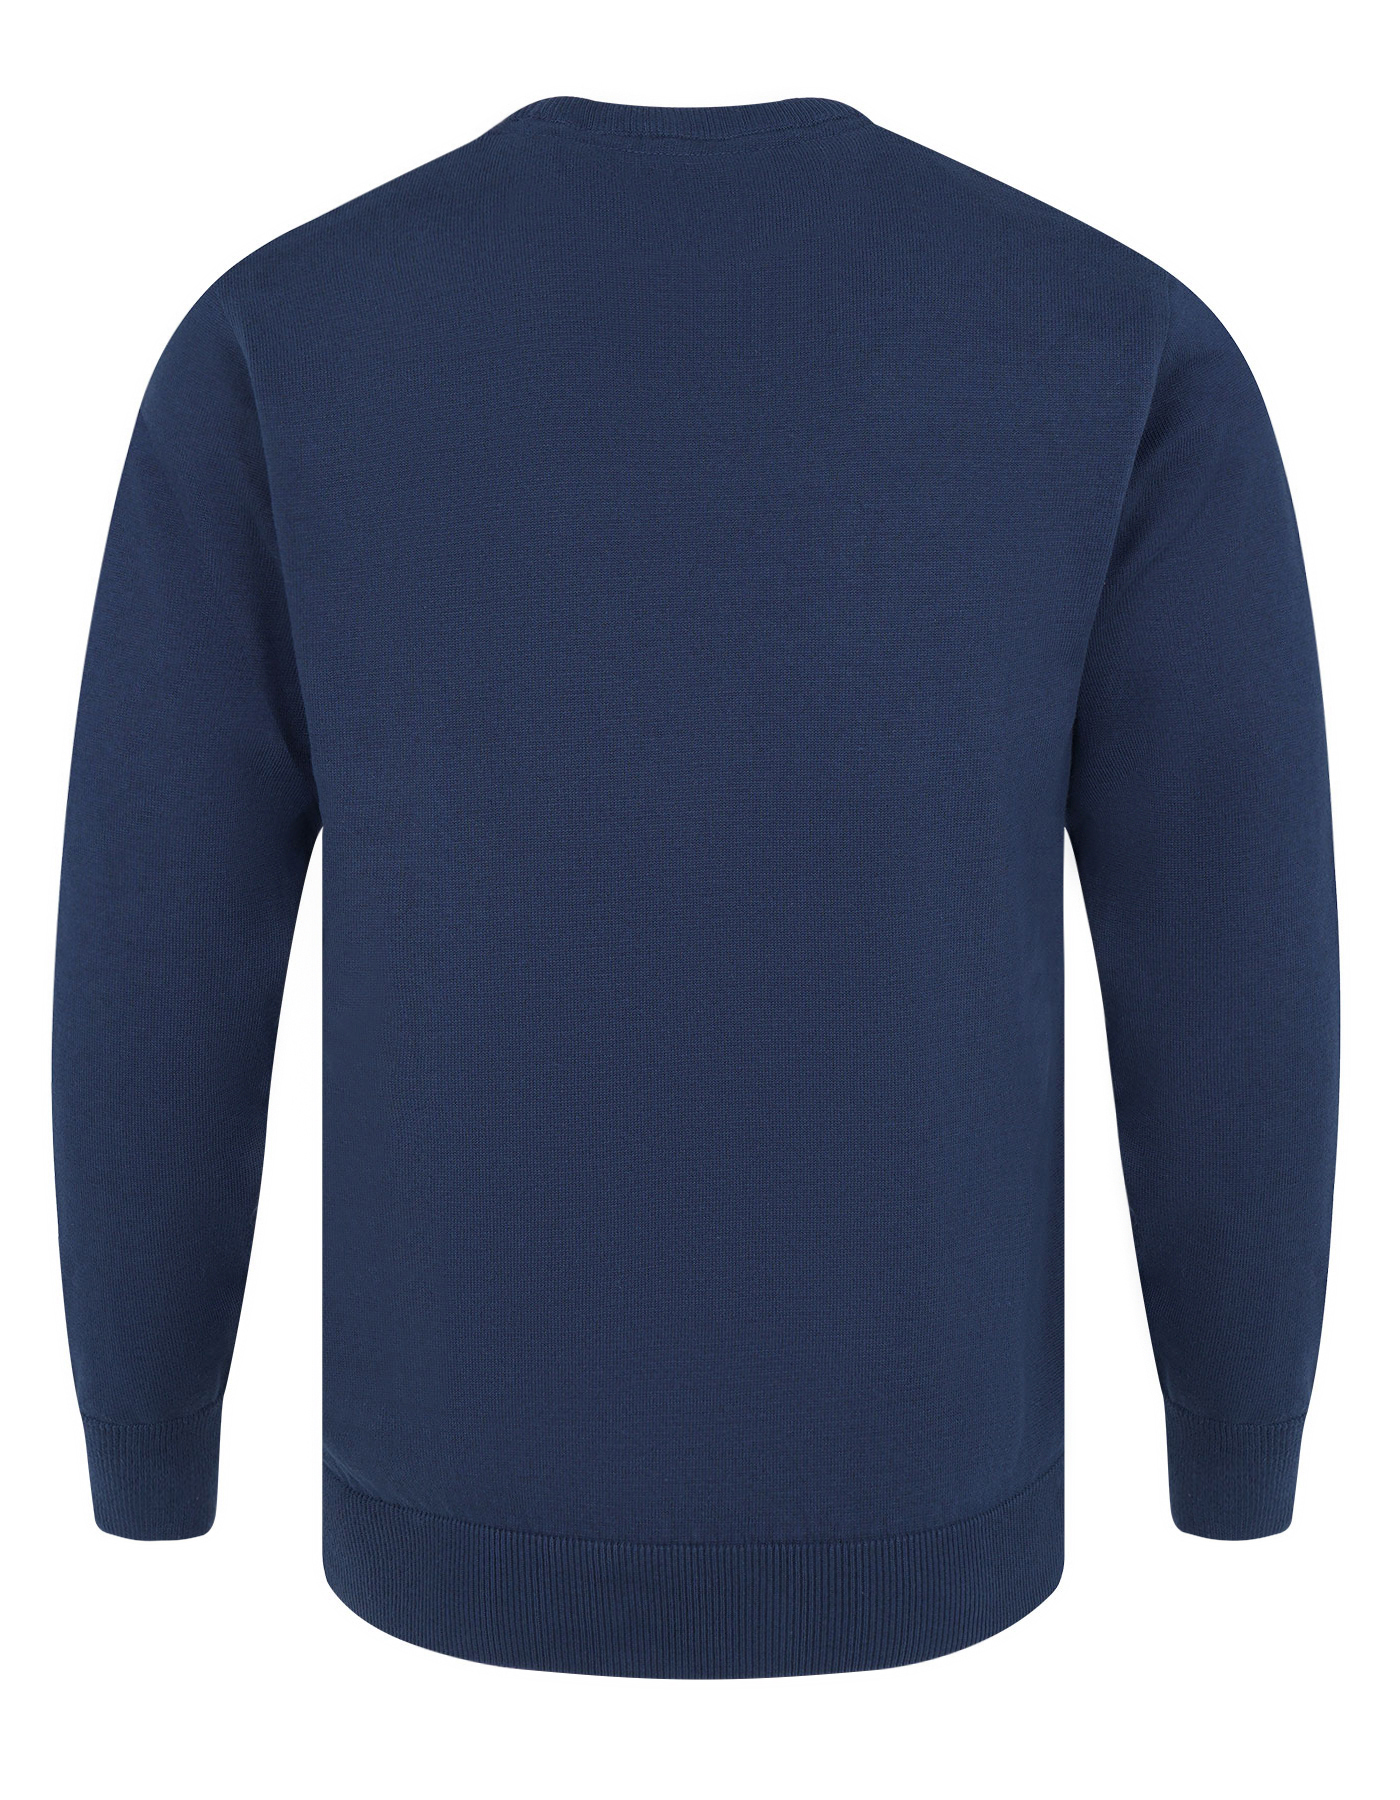 Navy Crew Neck Sweater For Men